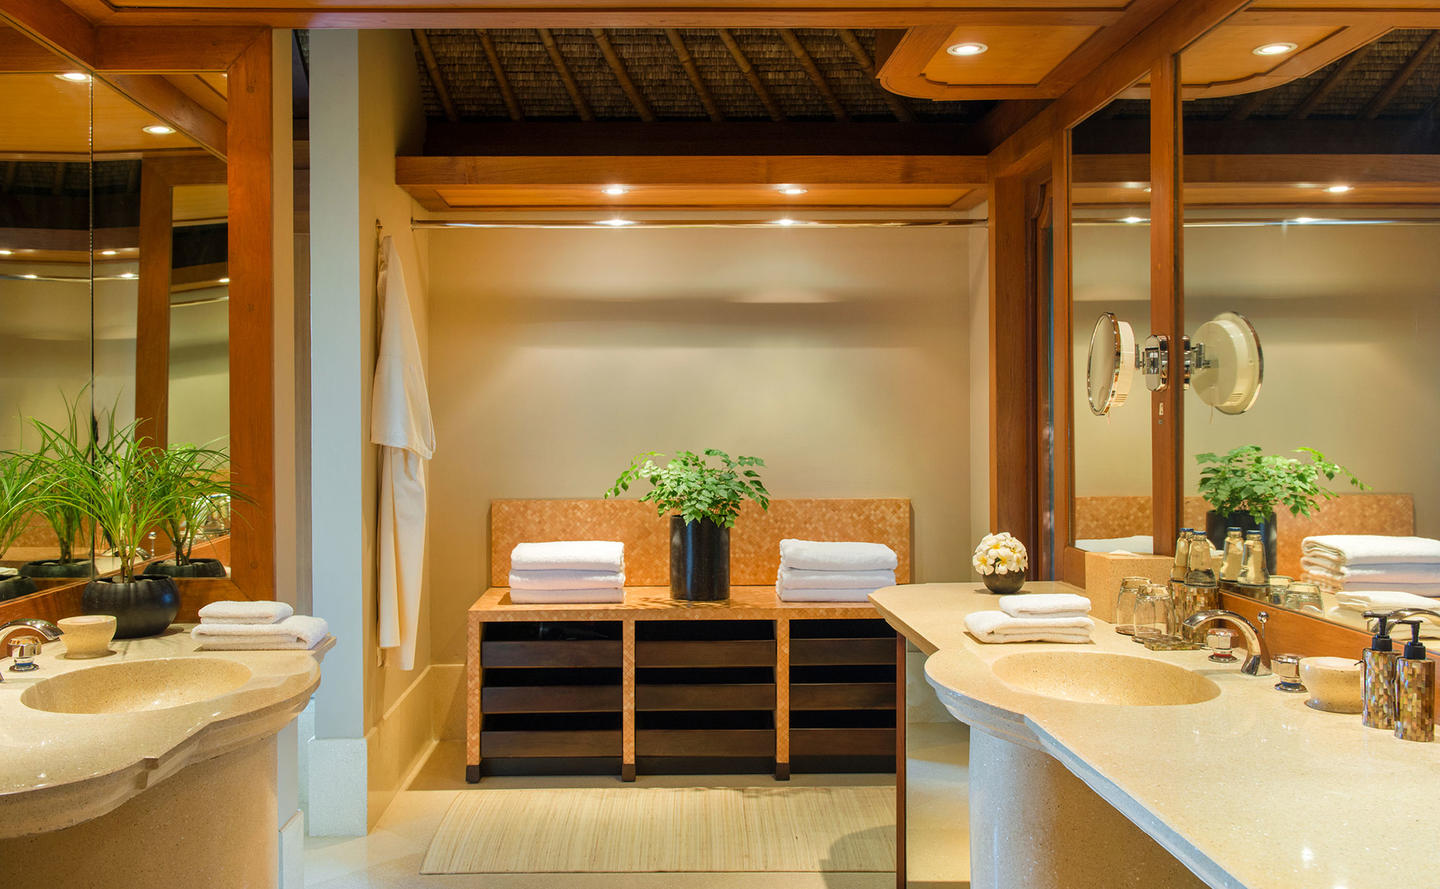 Bathroom, Indrakila Suite - Amankila, Bali, Indonesia